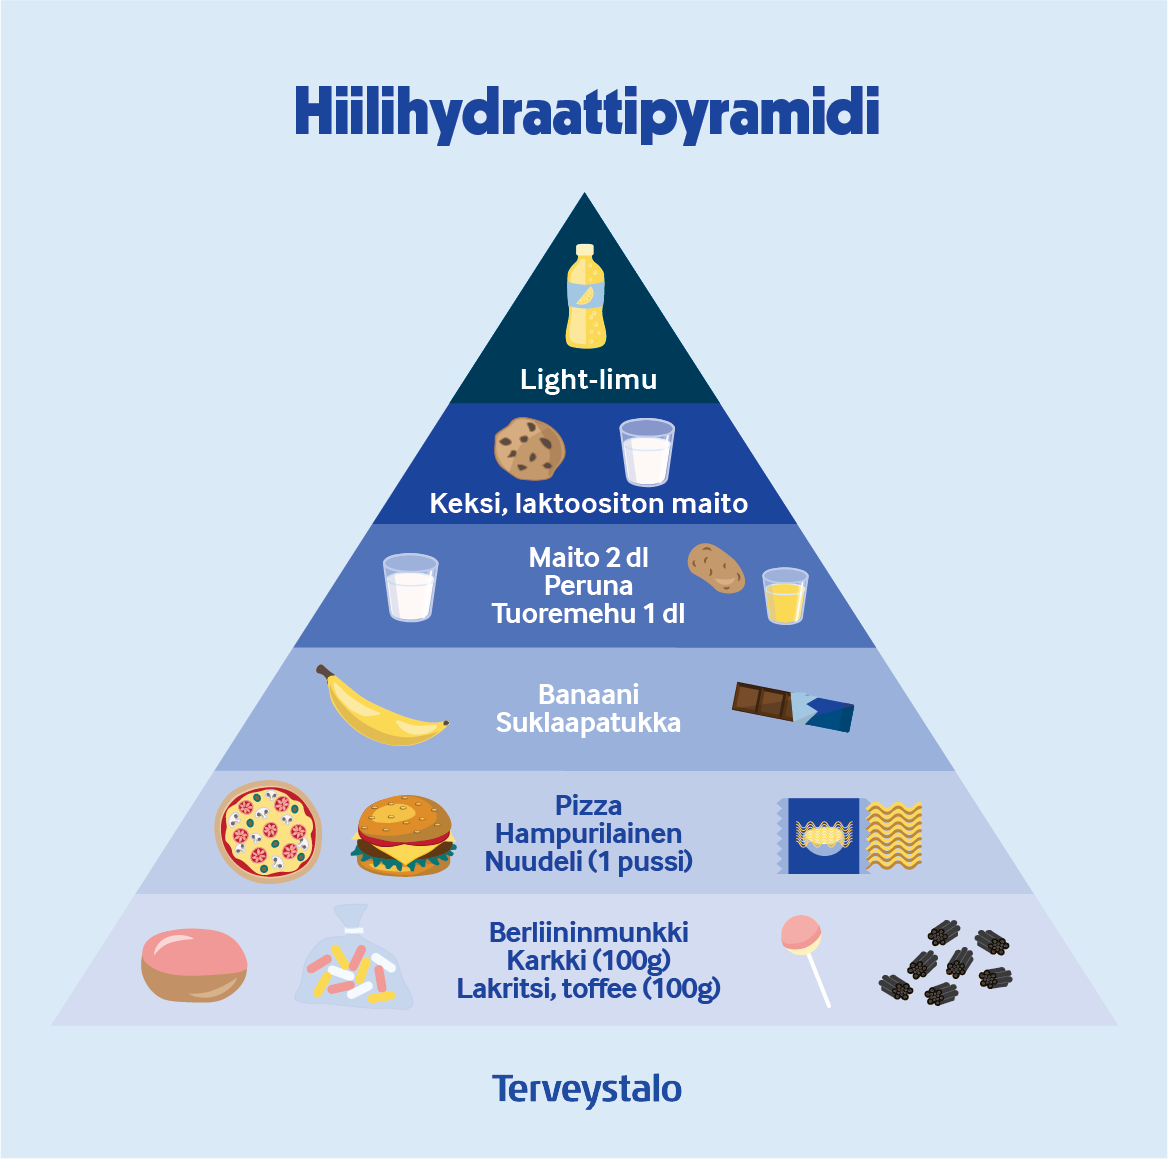 Hiilihydraatti-pyramidi